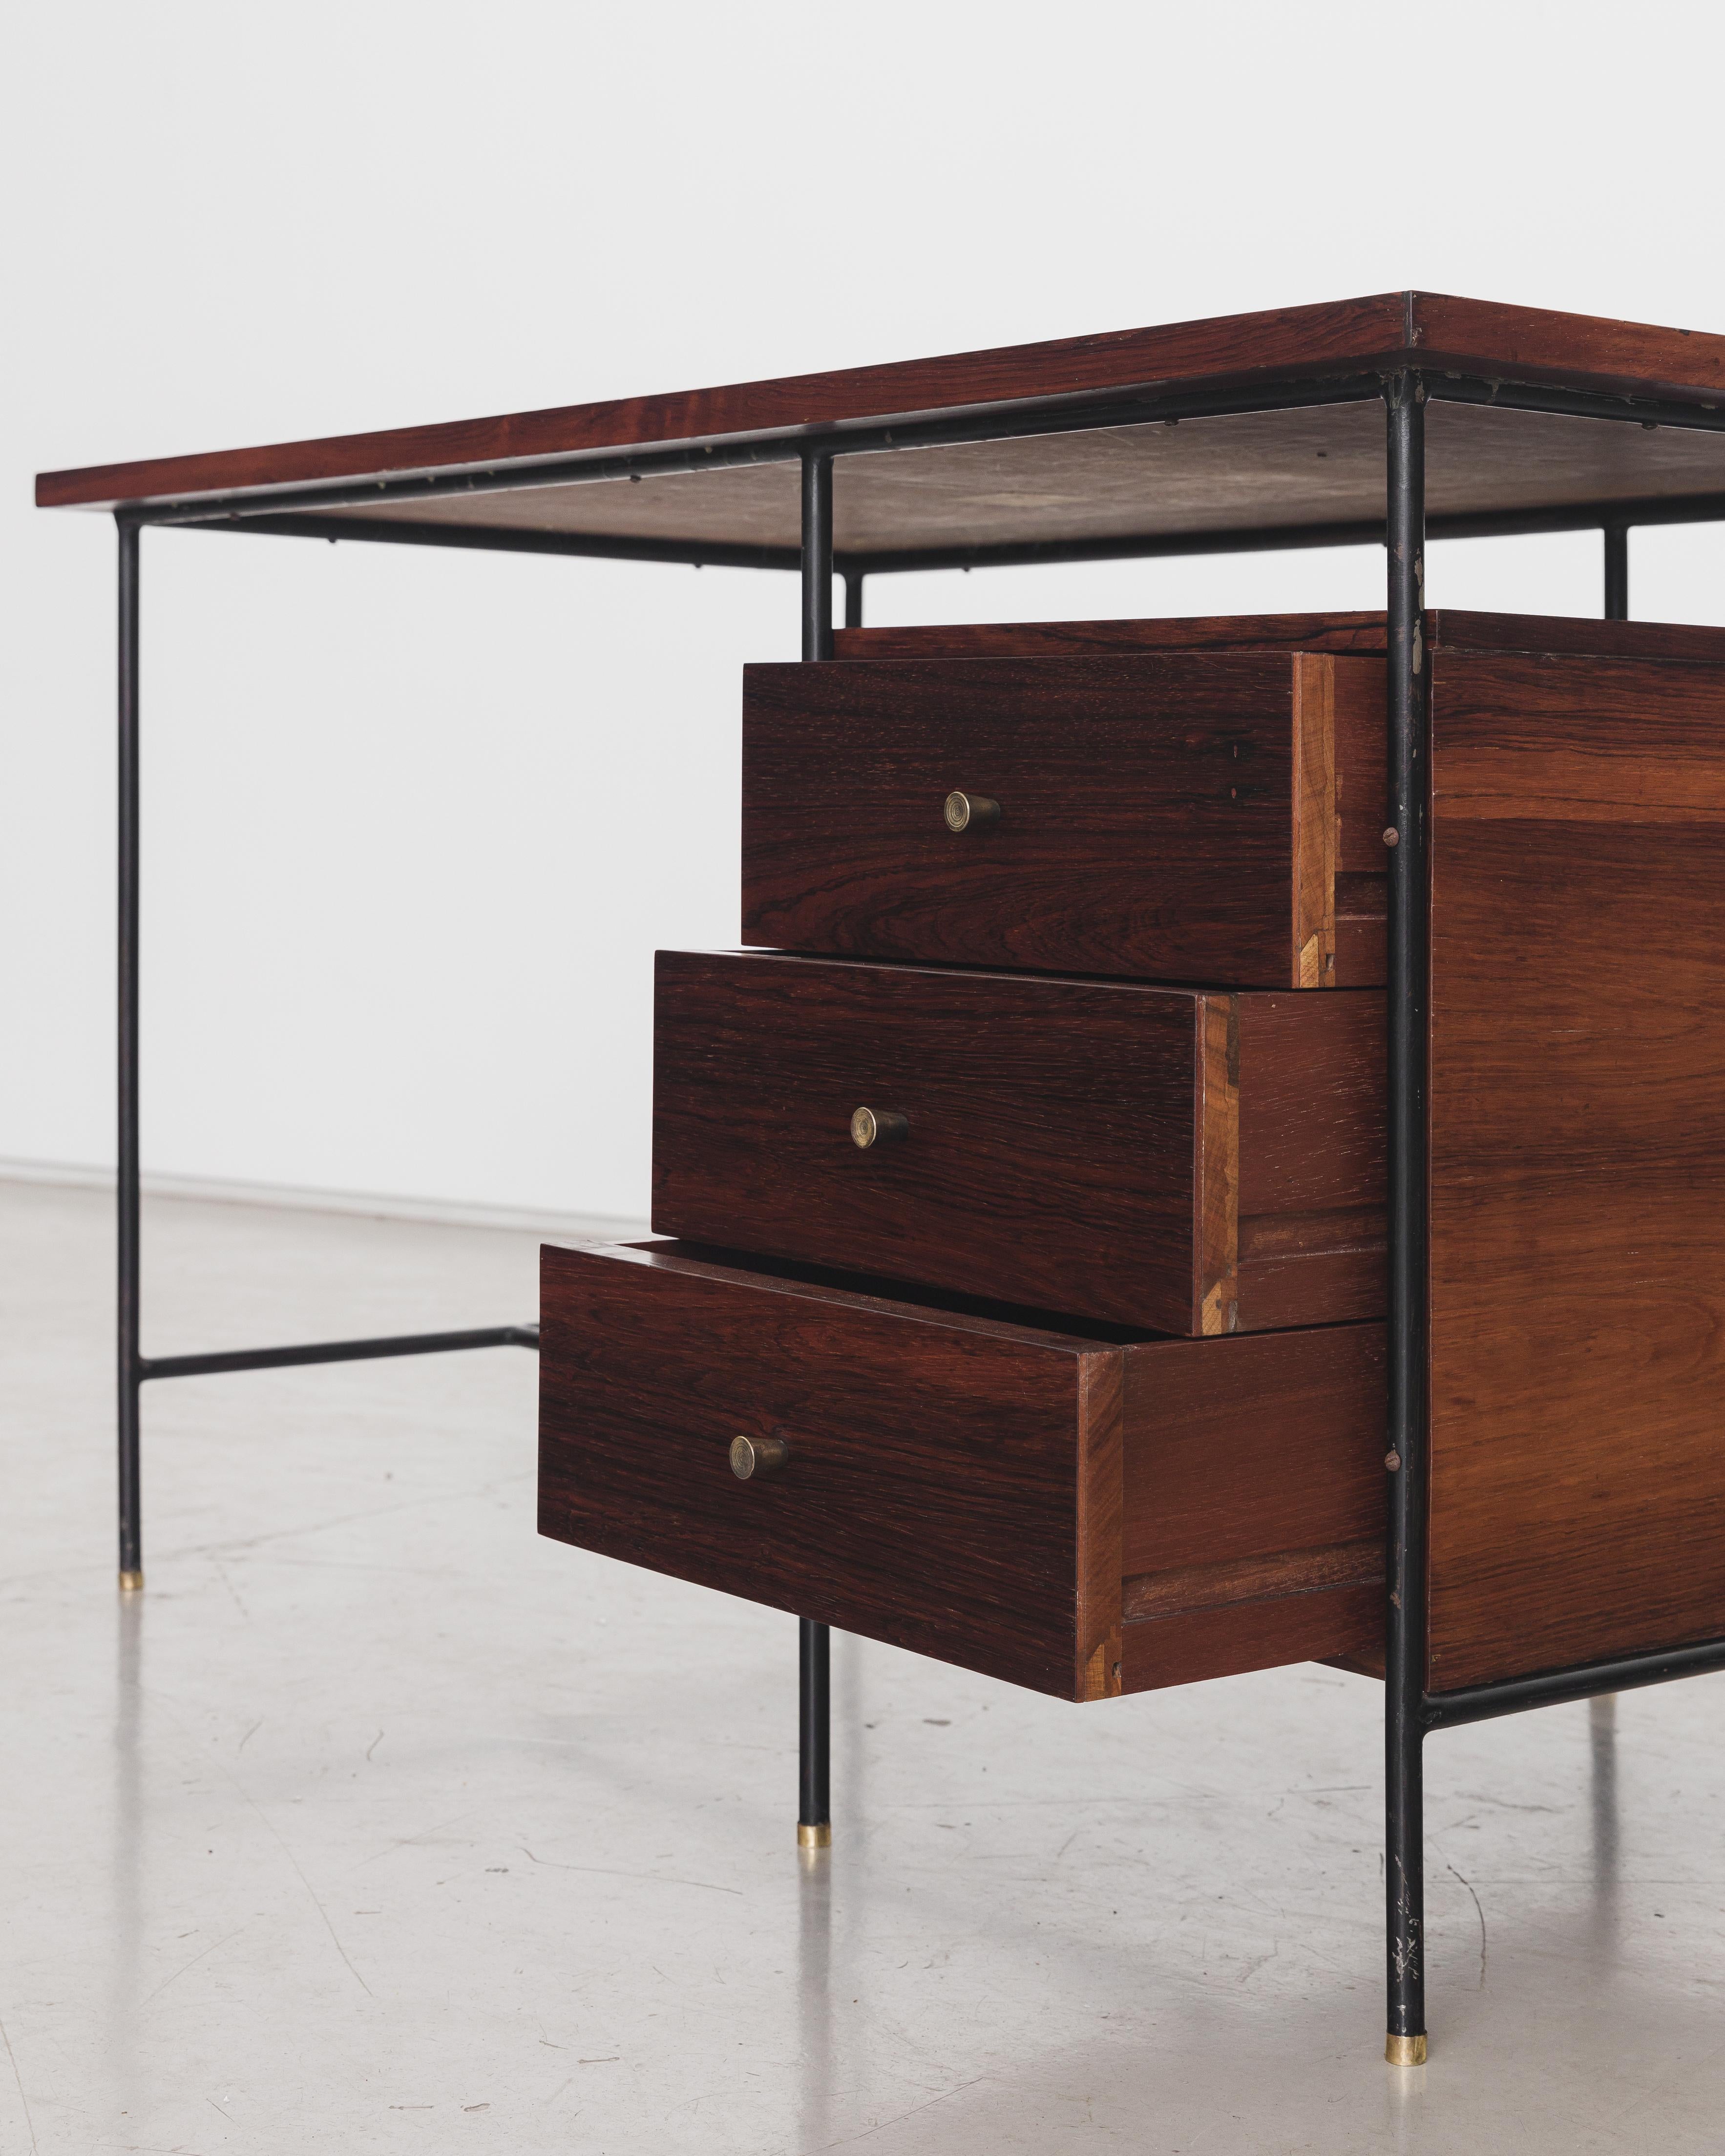 Mid-Century Modern Rosewood Desk by Geraldo de Barros 1950s, Brazilian Midcentury Design For Sale